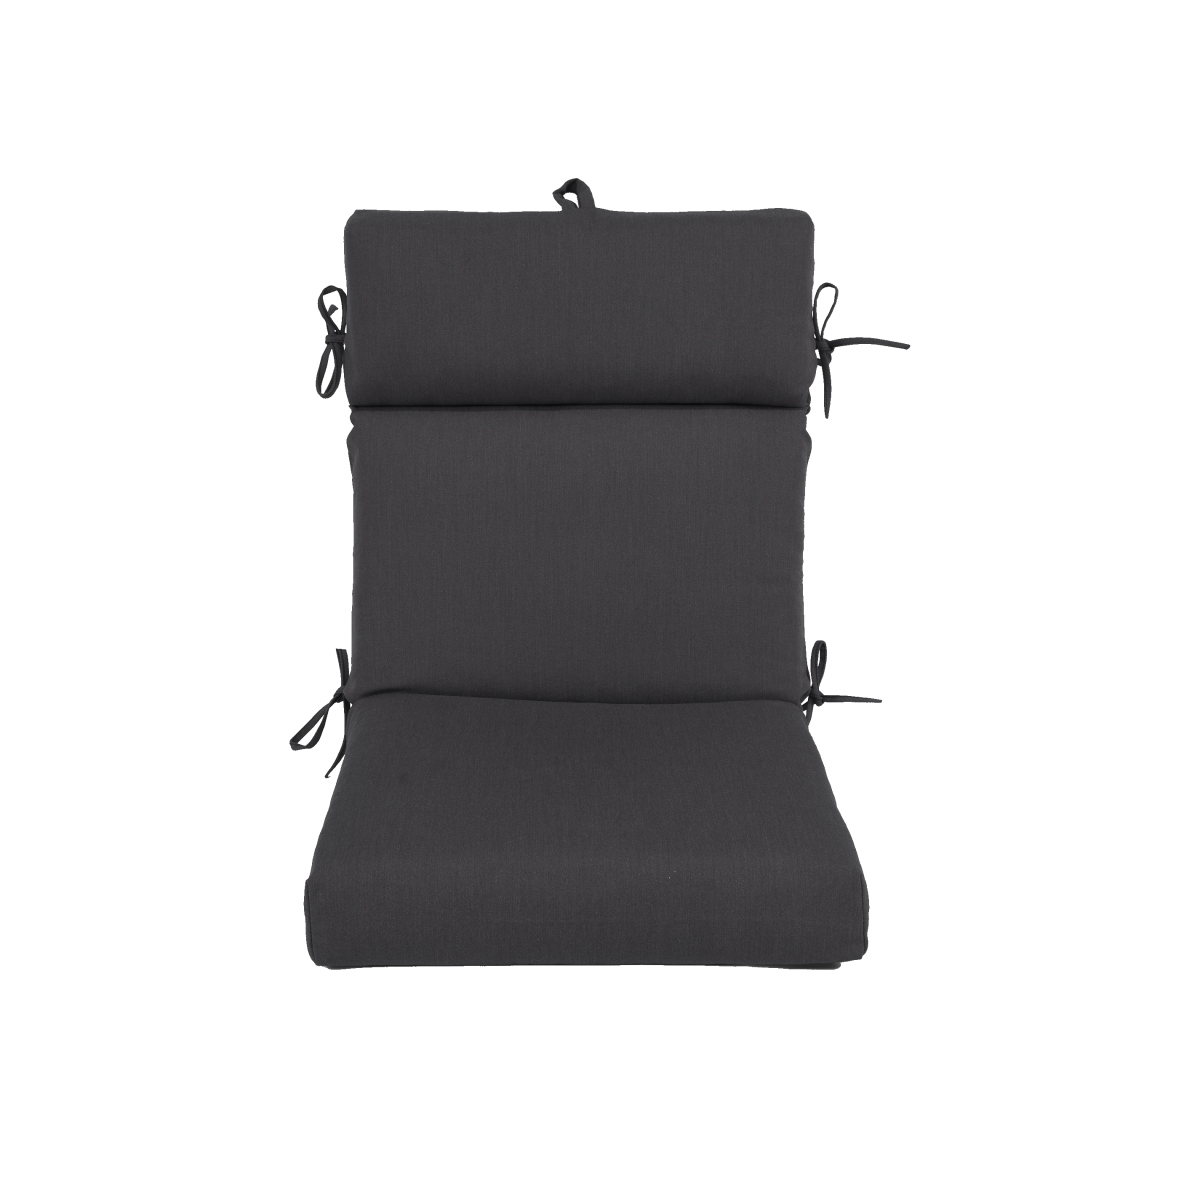 Cudc44-sda48 44 X 21 In. Pacifica Premium Patio Dining Chair Cushion In Slate